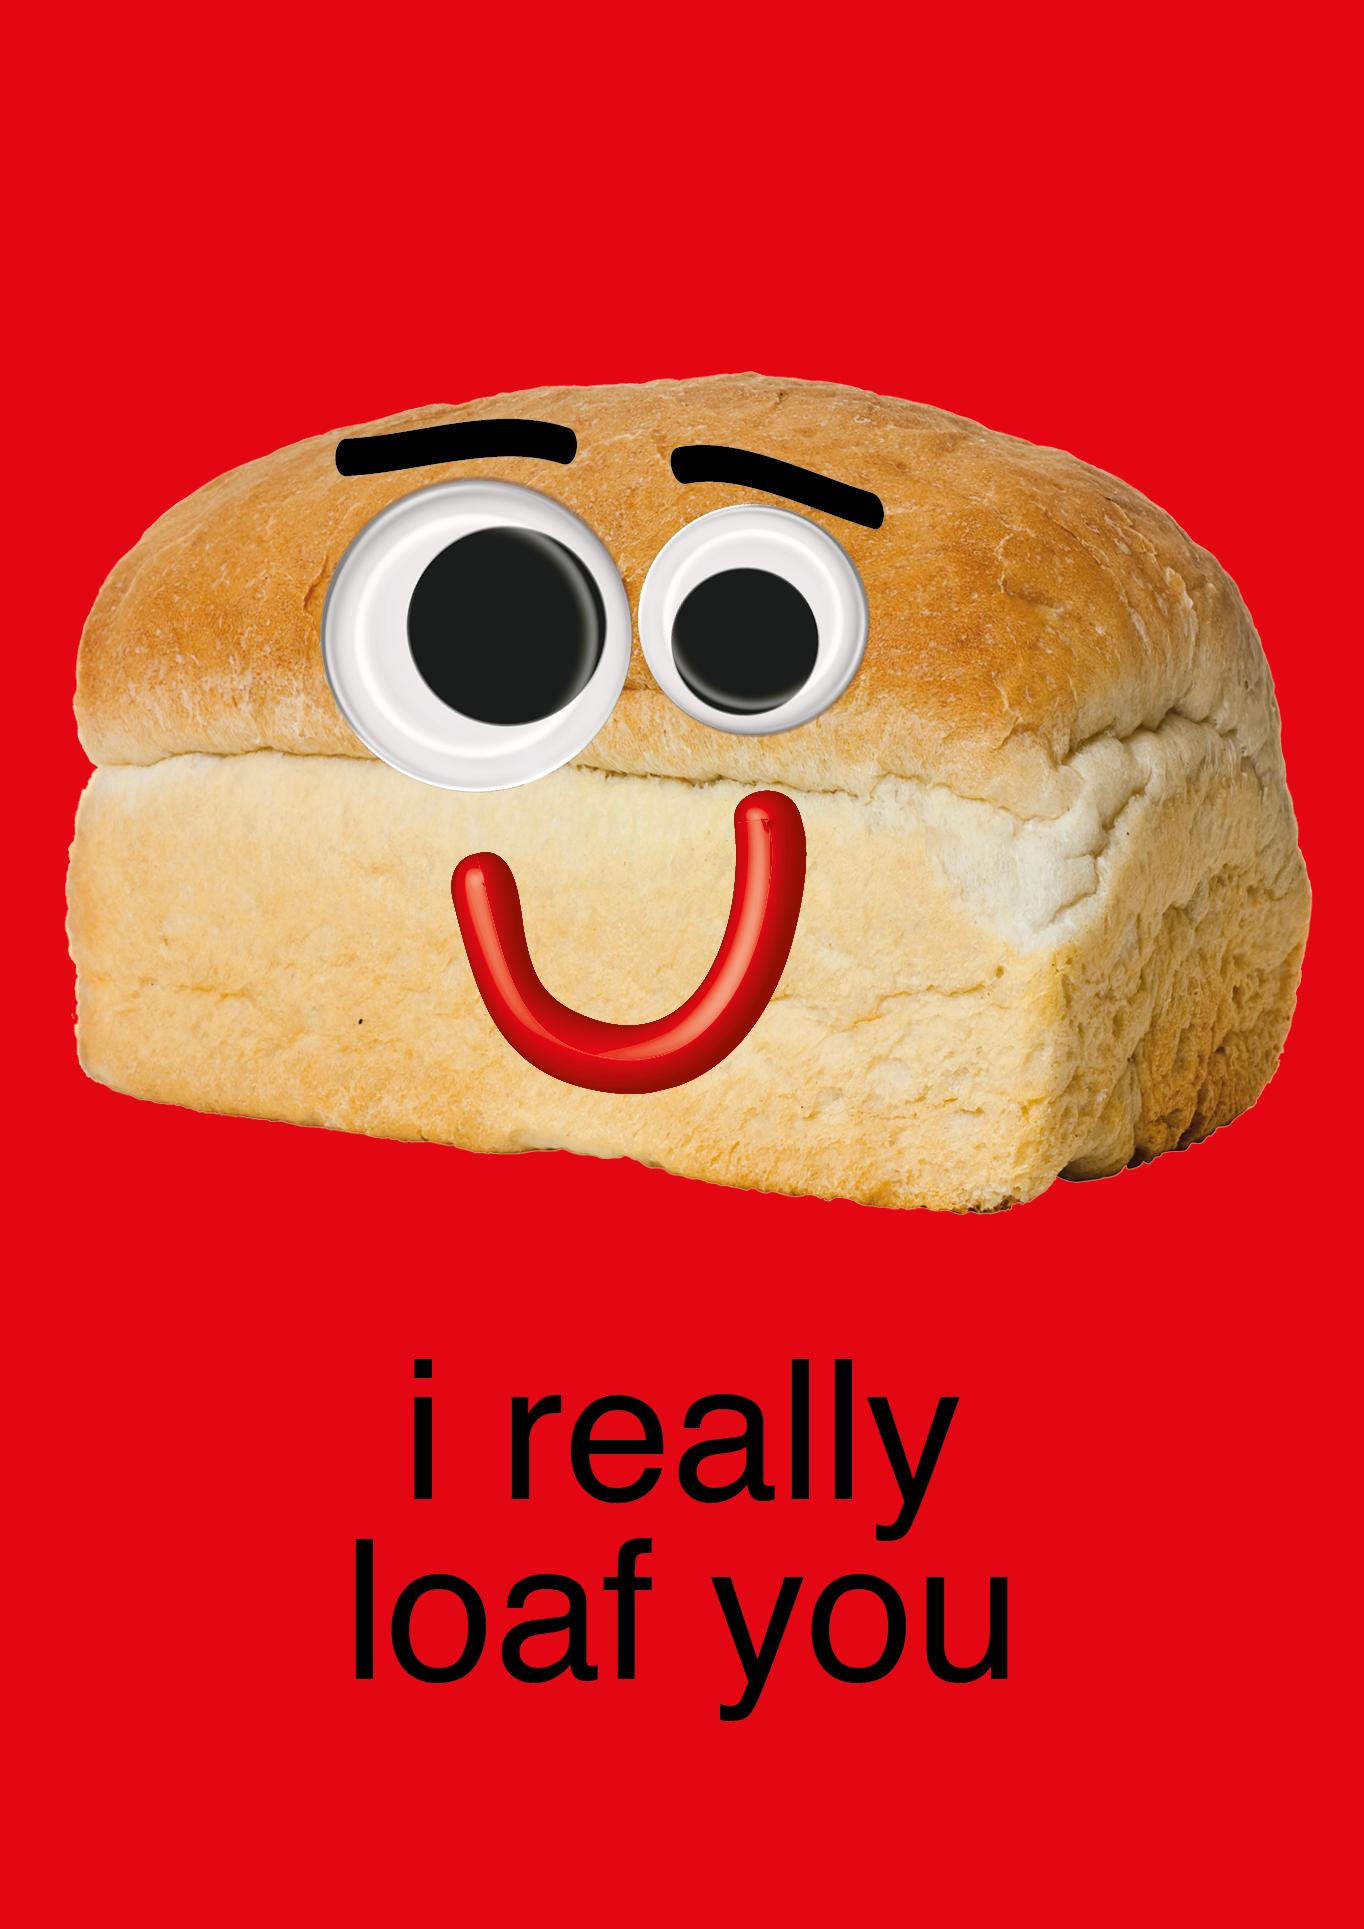 I really loaf you